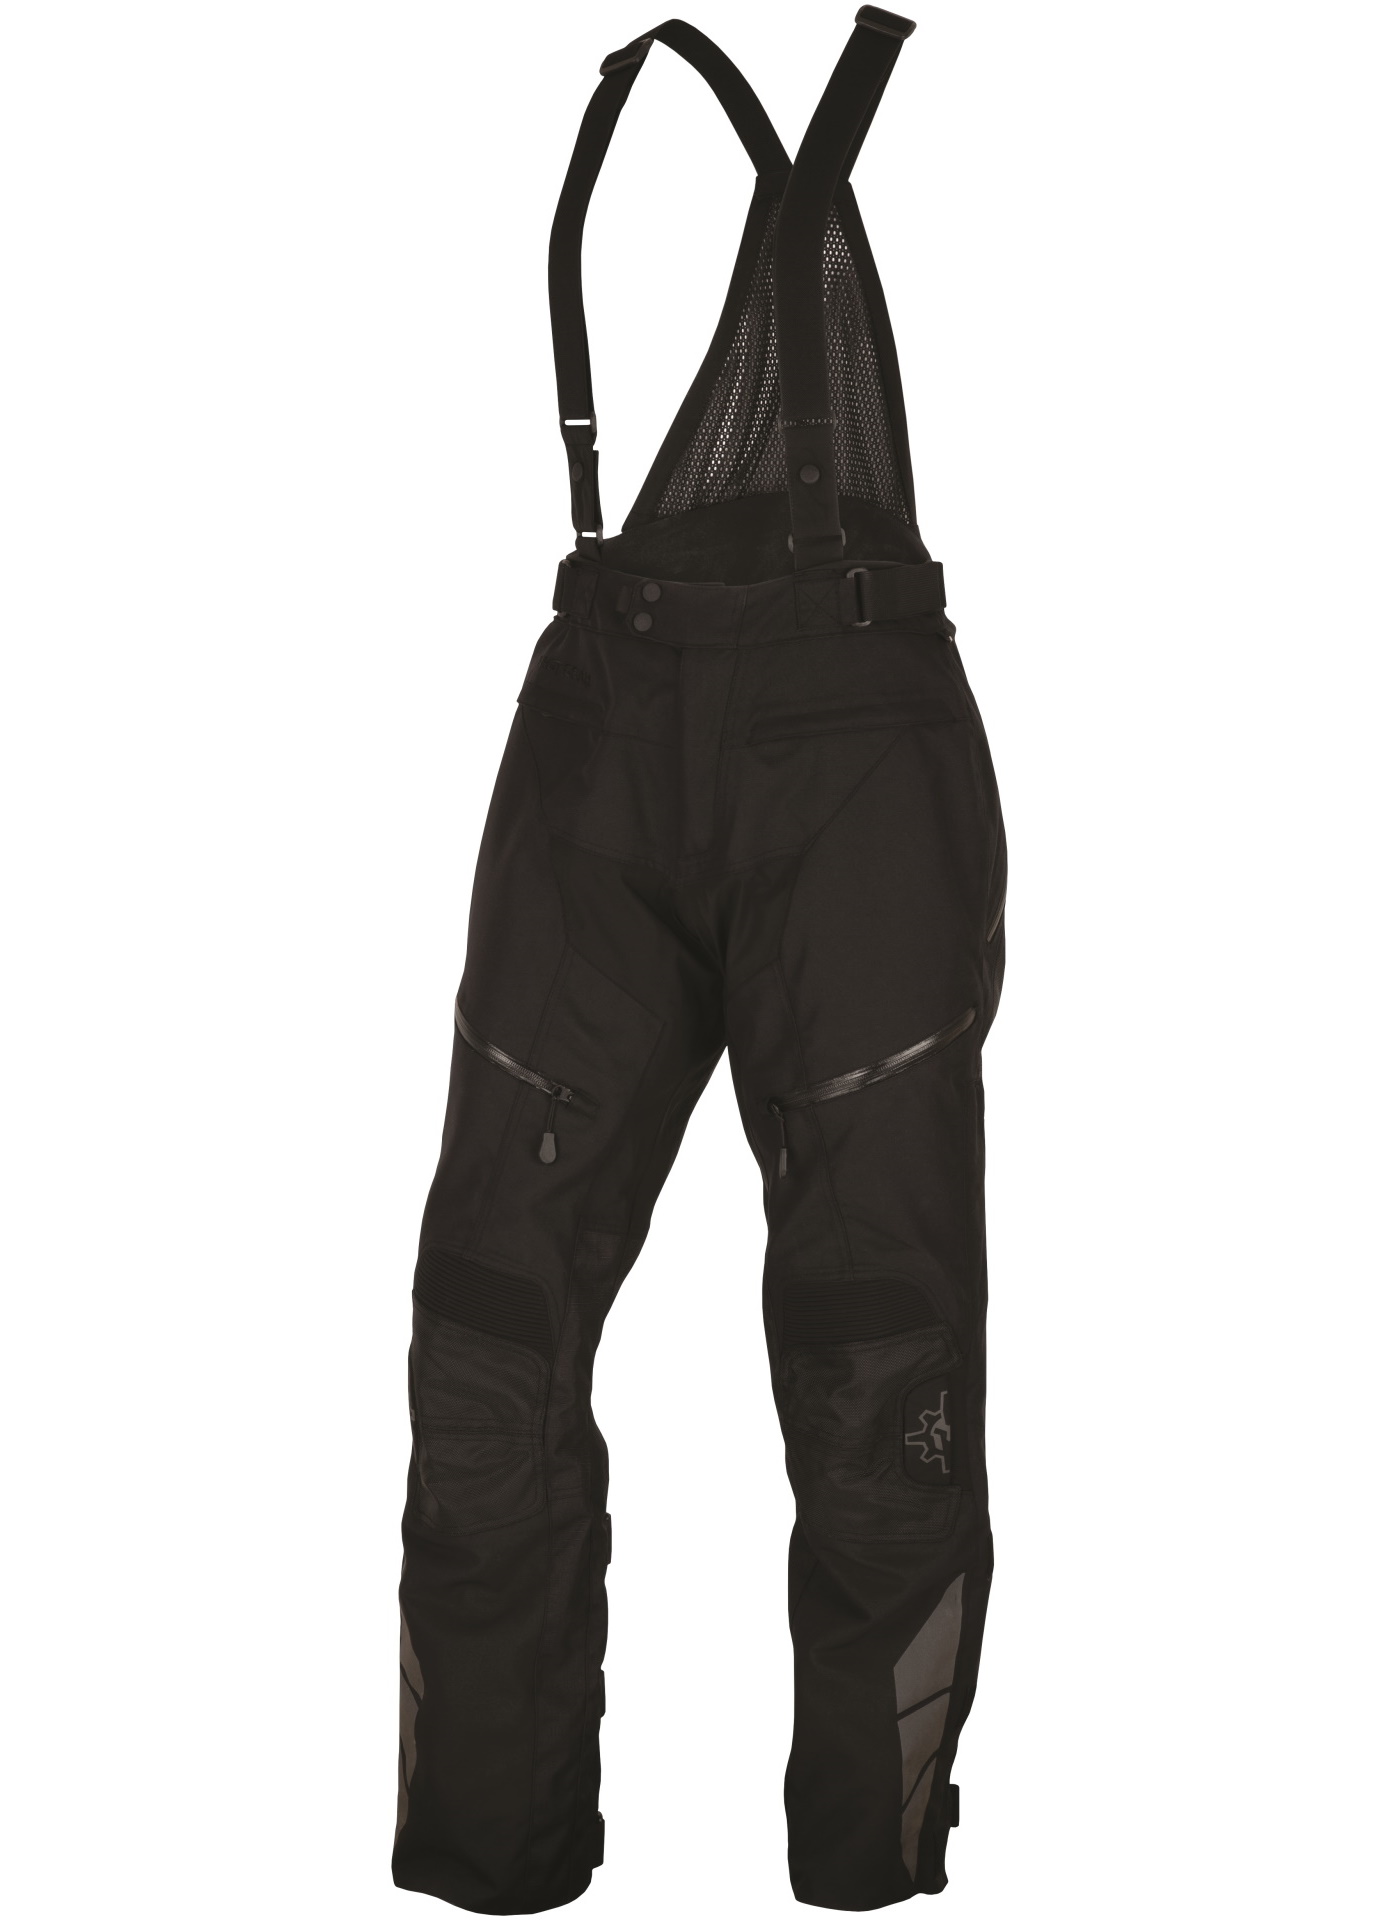 KILIMANJARO 2.0 PANT | Pants And Suits | Premium Motorcycle Clothing ...